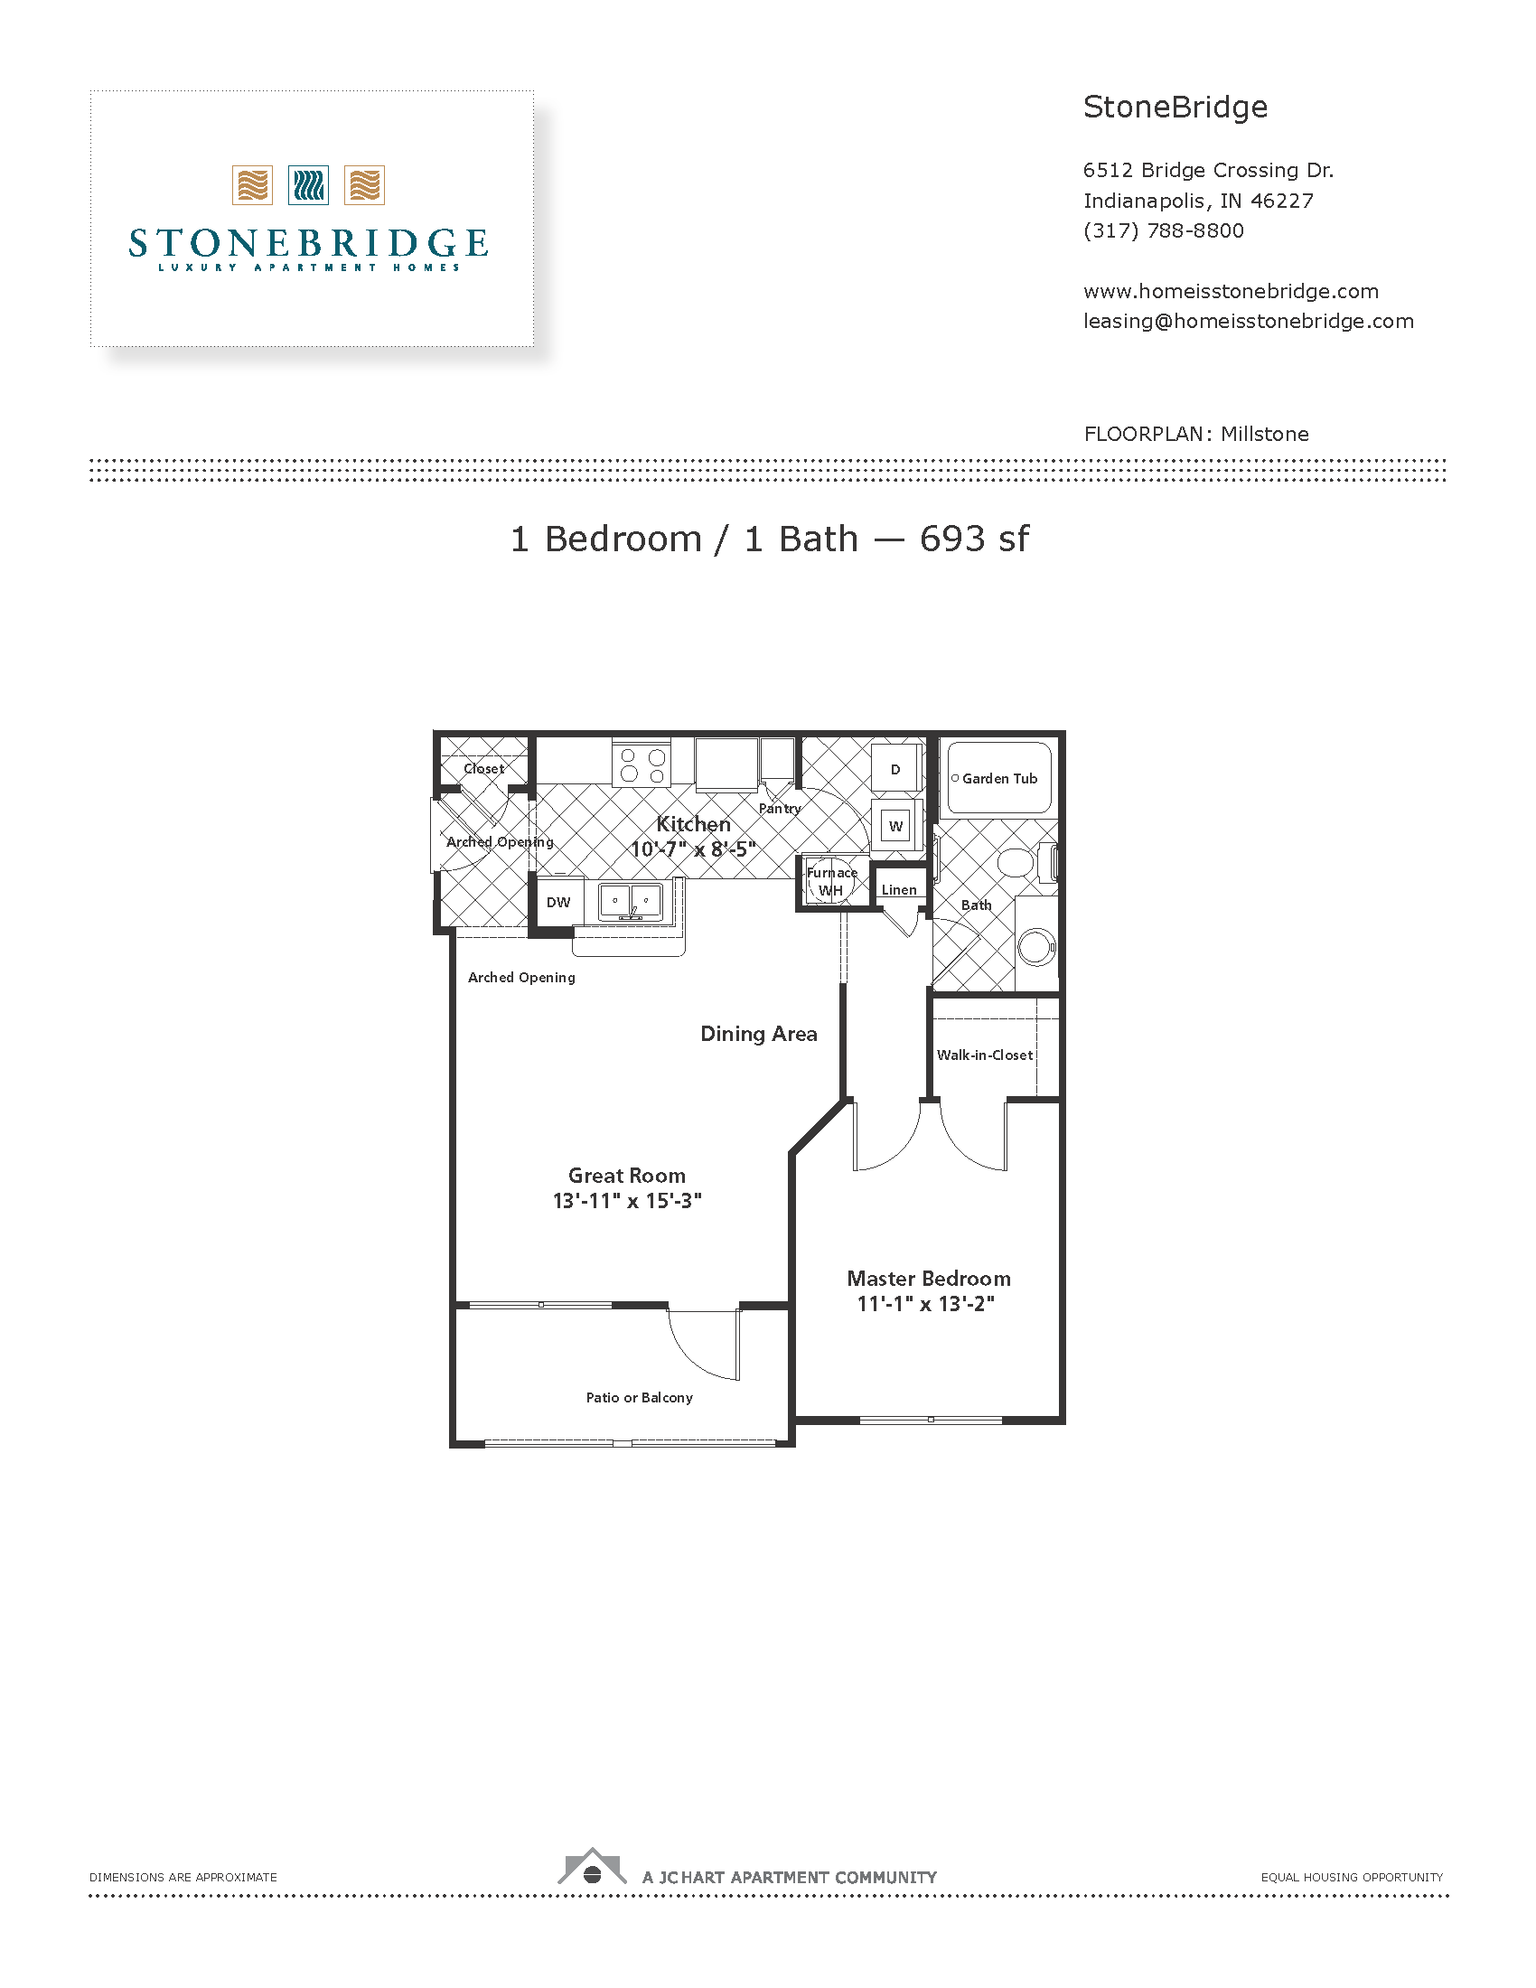 Millstone floor plan - StoneBridge Apartment Homes _ Indianapolis apartments_preview.png